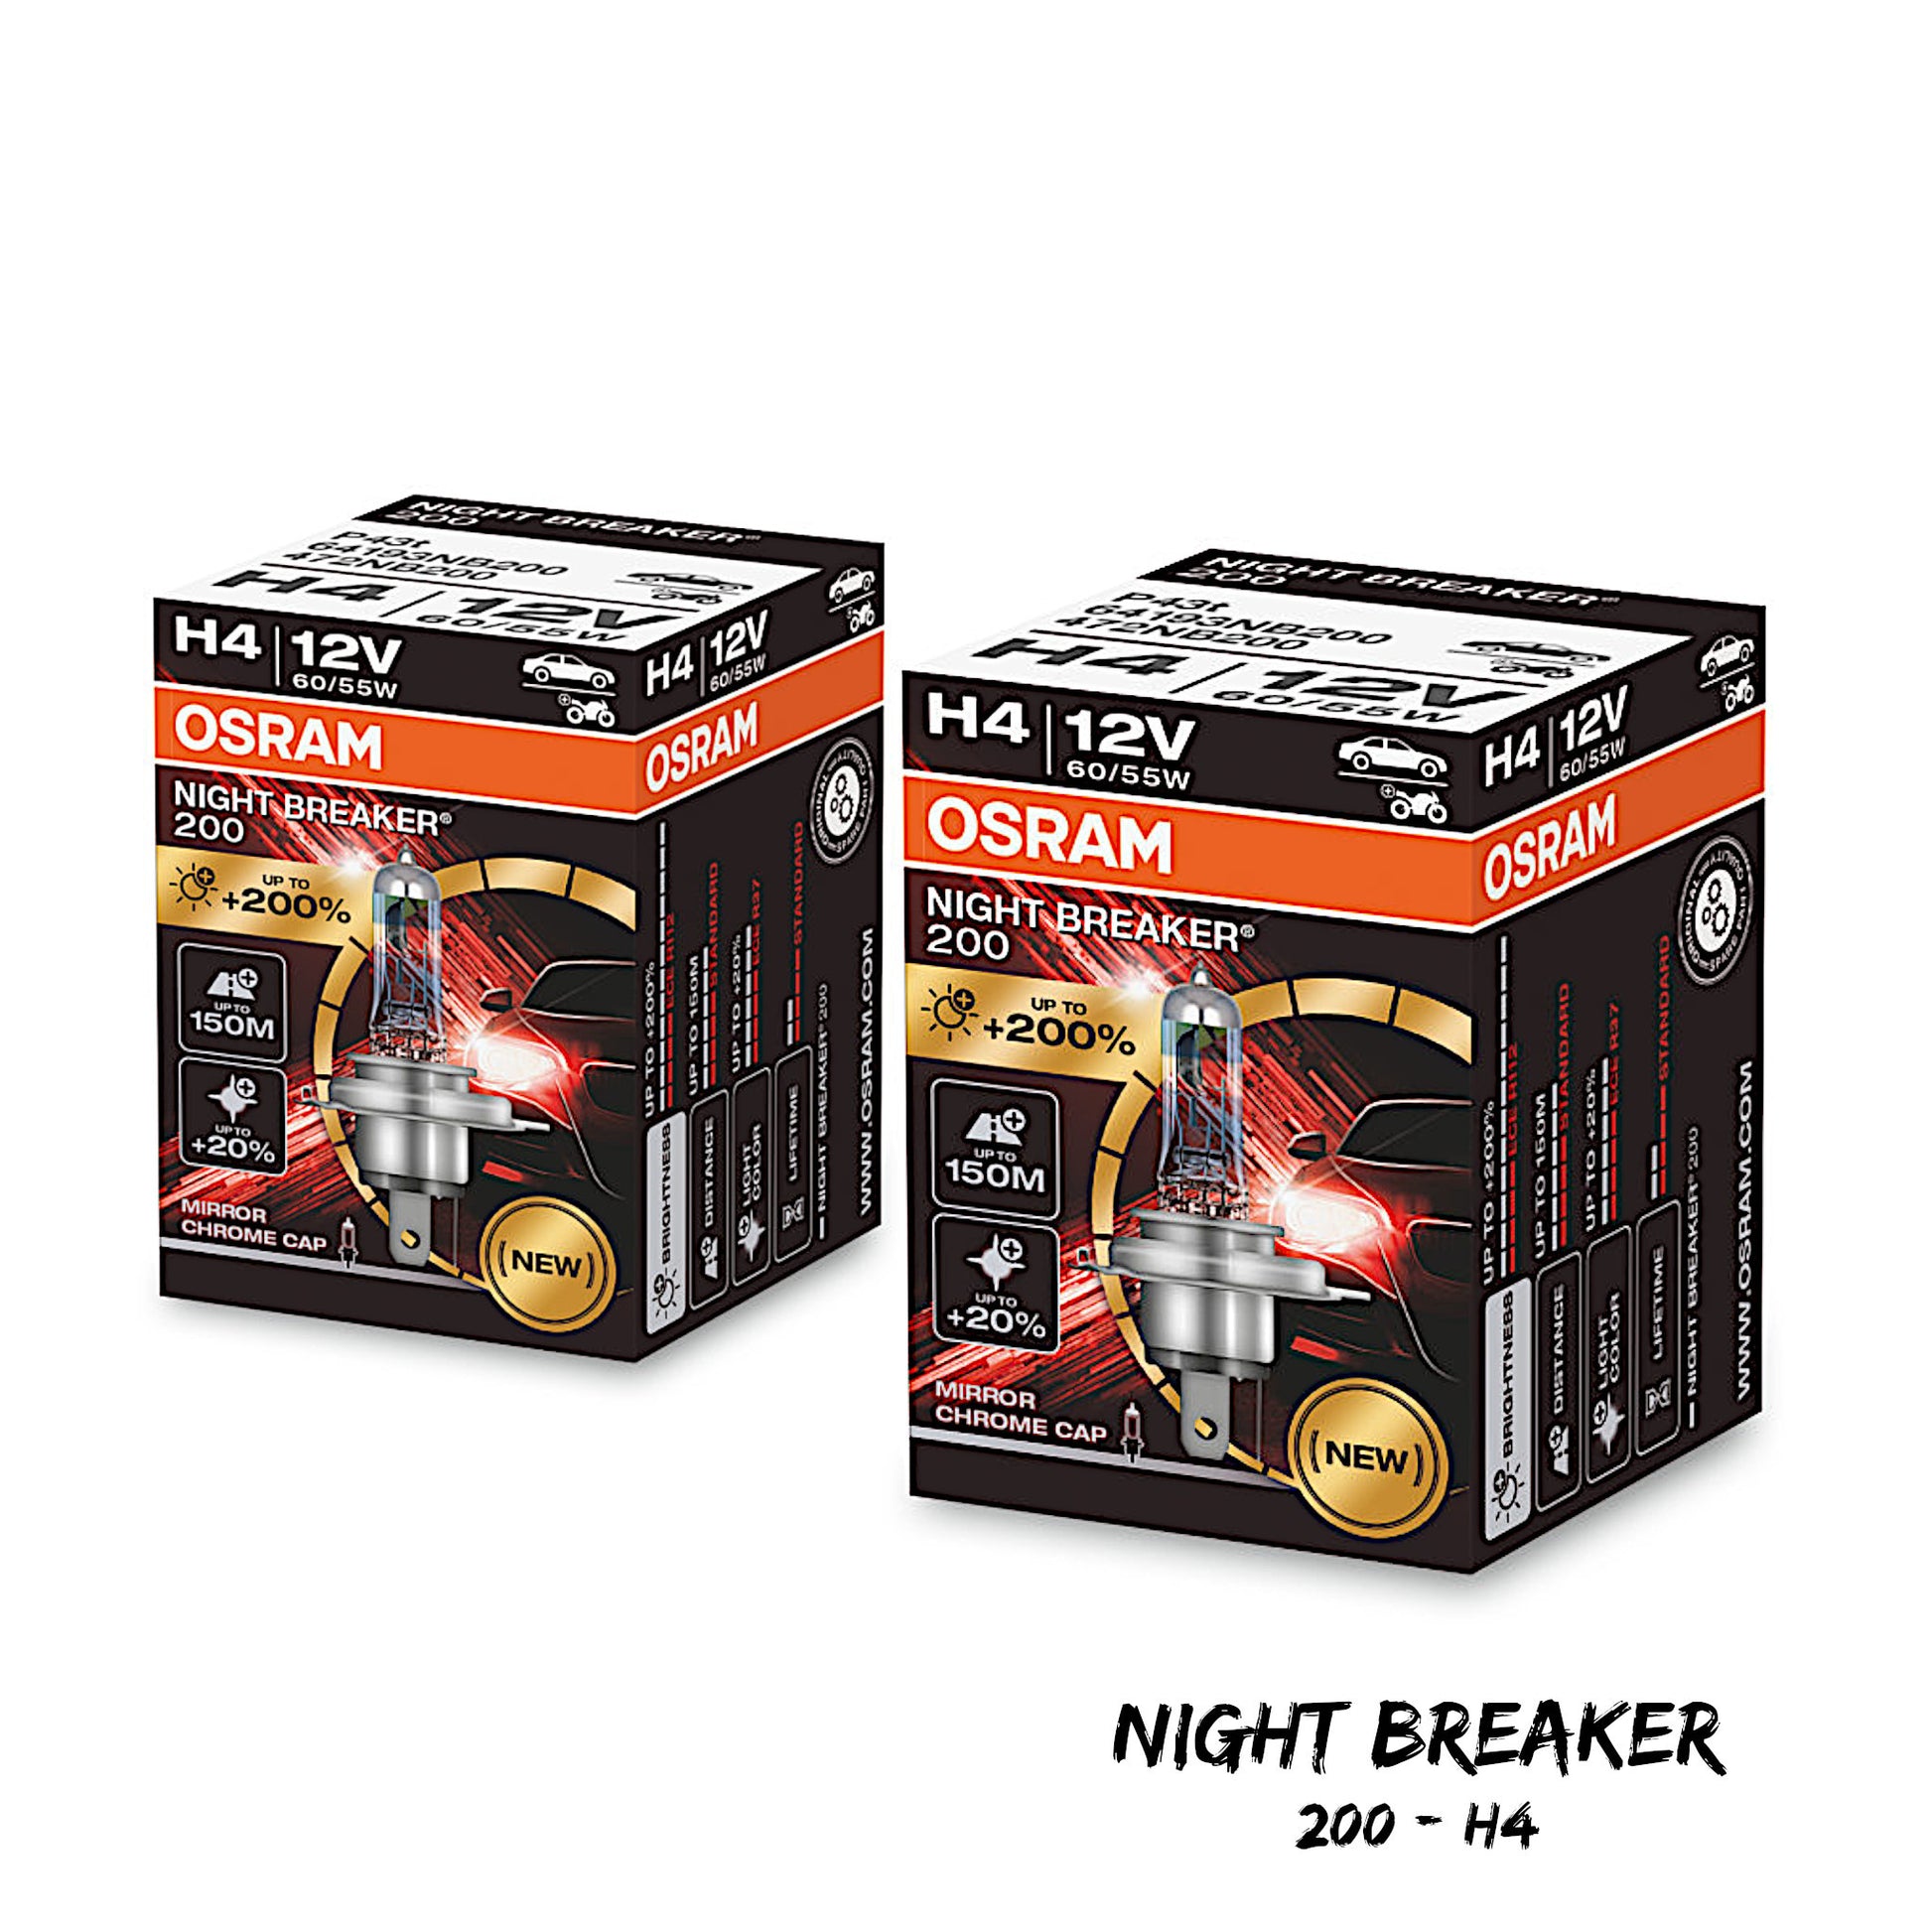 OSRAM NIGHT BREAKER 200 H7 (Twin) Headlight Bulbs